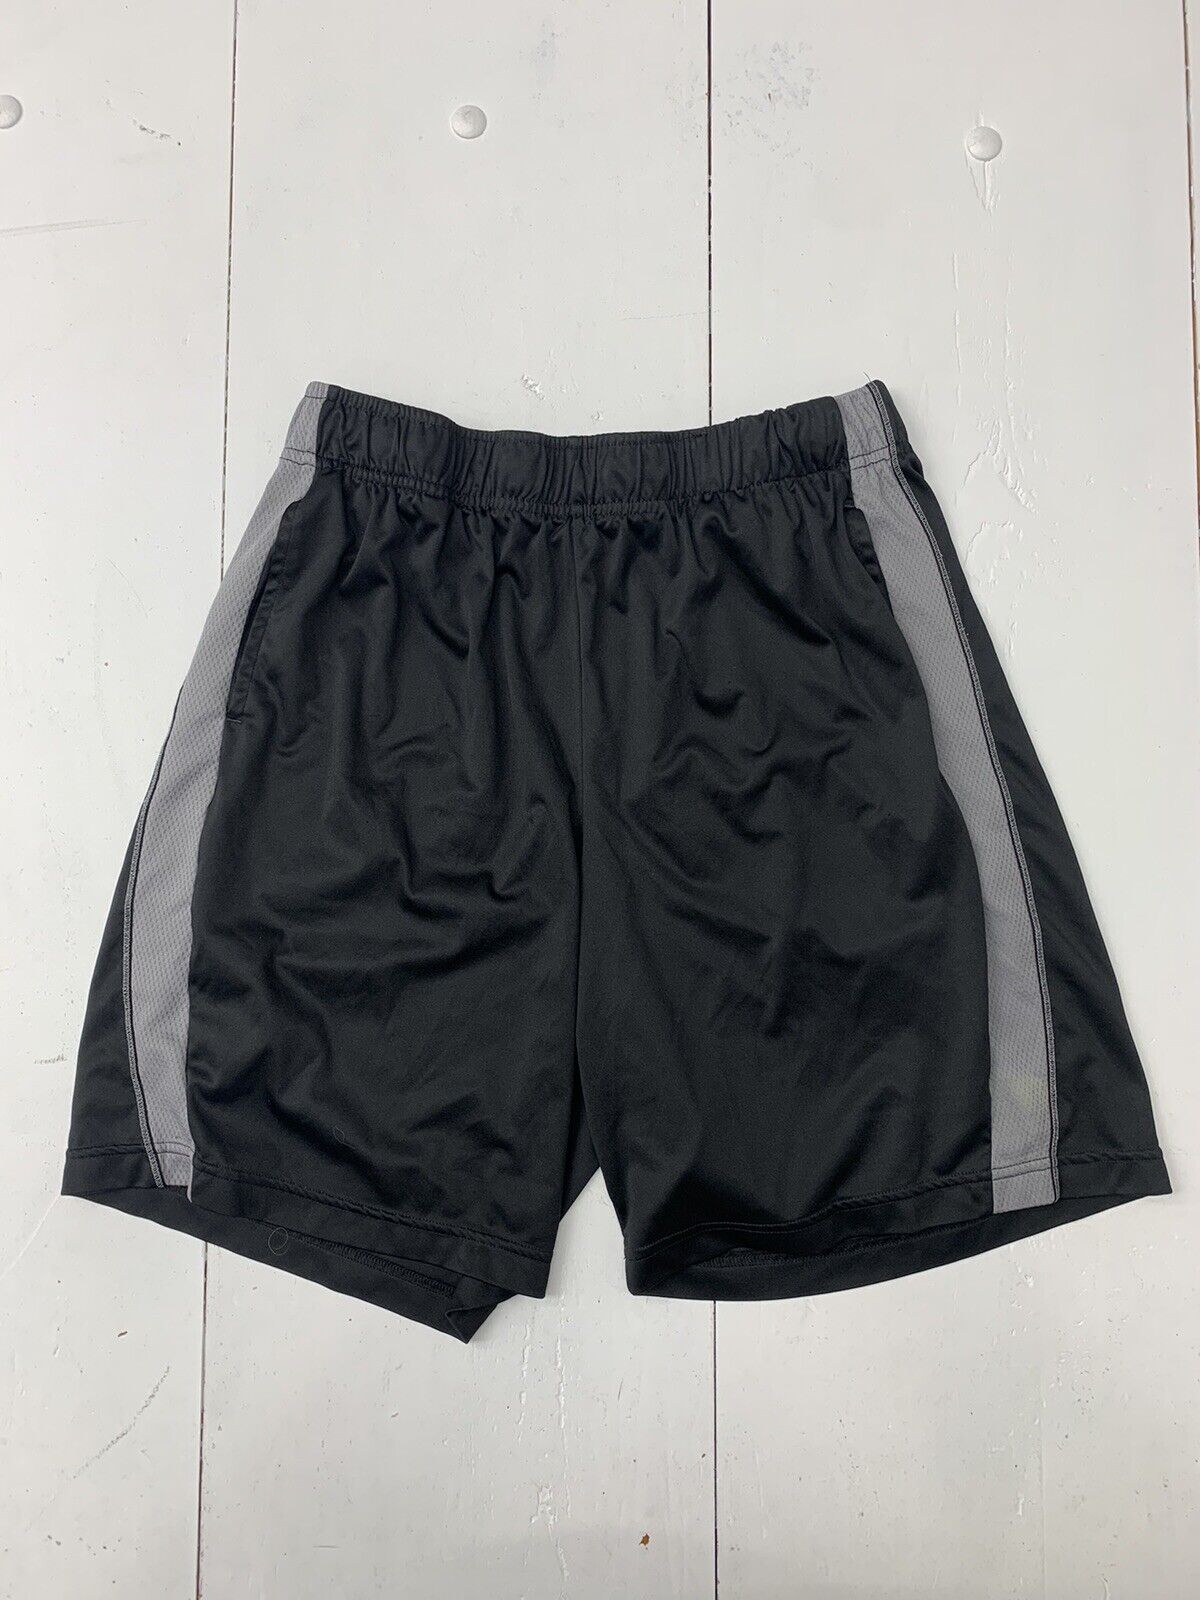 Tek Gear Mens Black Athletic Shorts Size Large